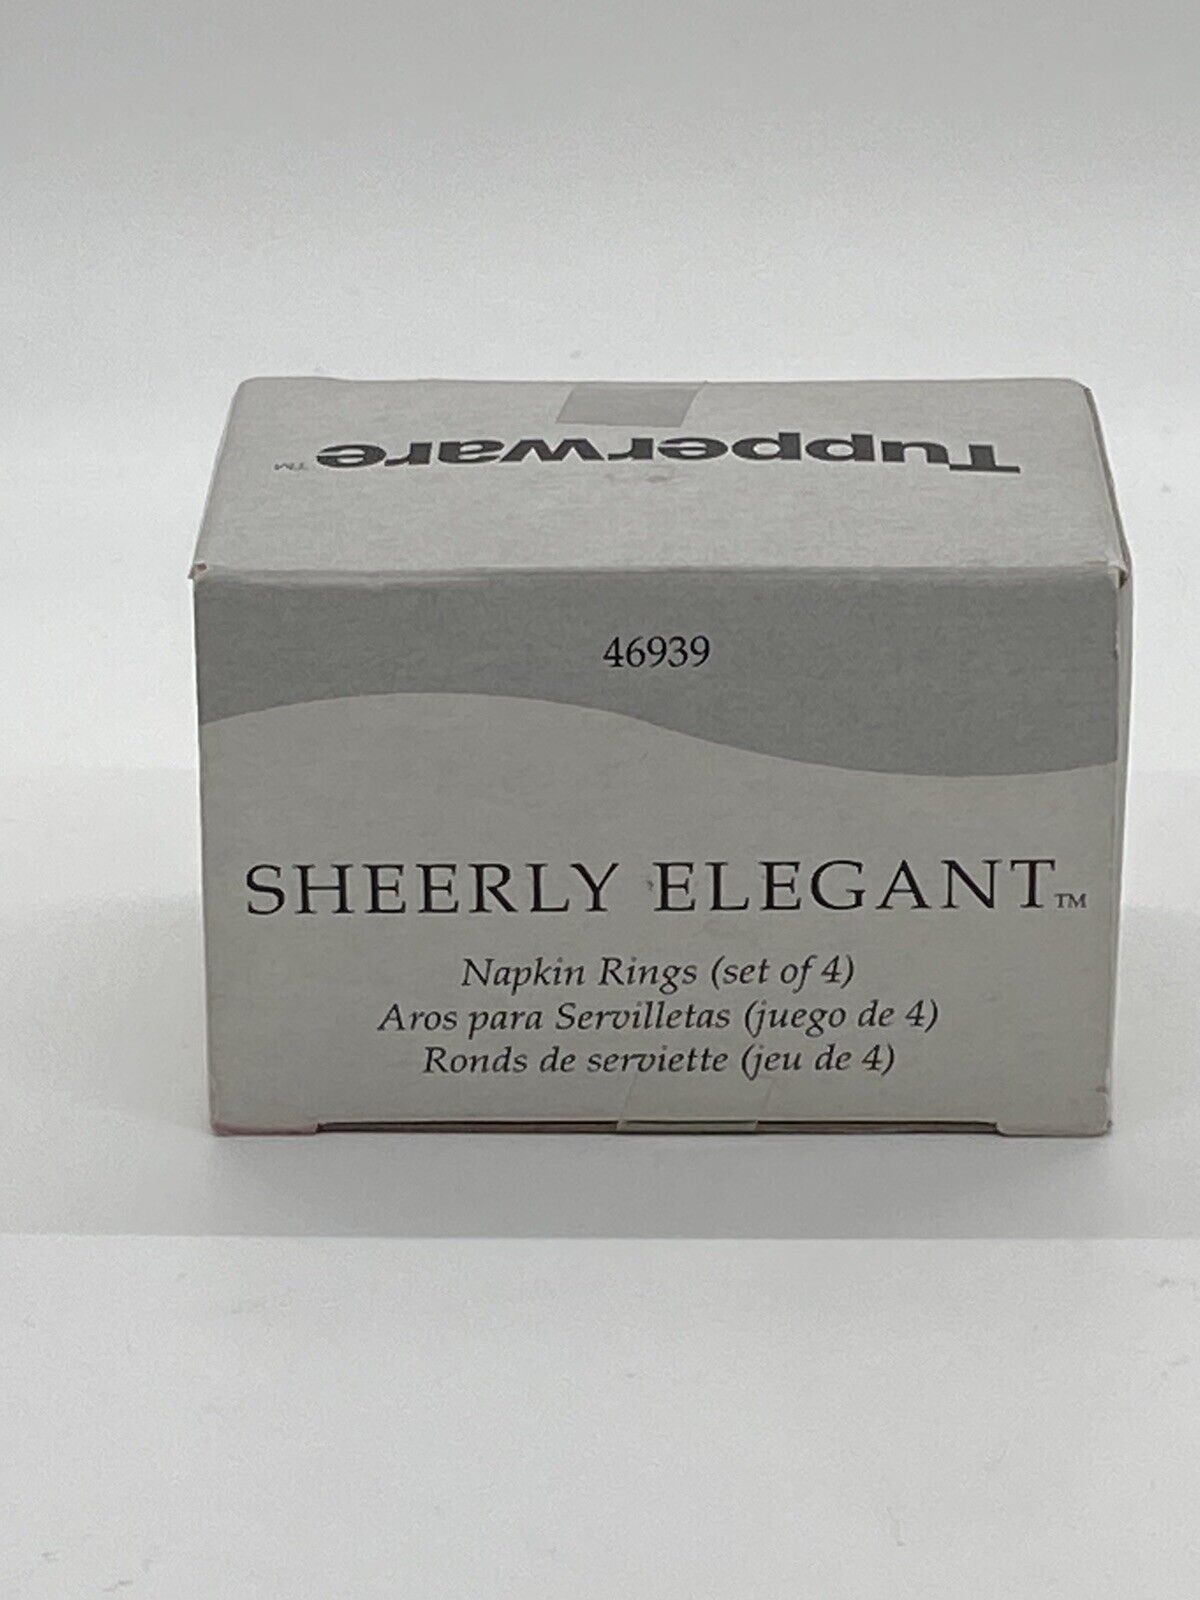 Vintage Tupperware Sheerly Elegant Napkin Rings Set of 4 NEW Unopened Box